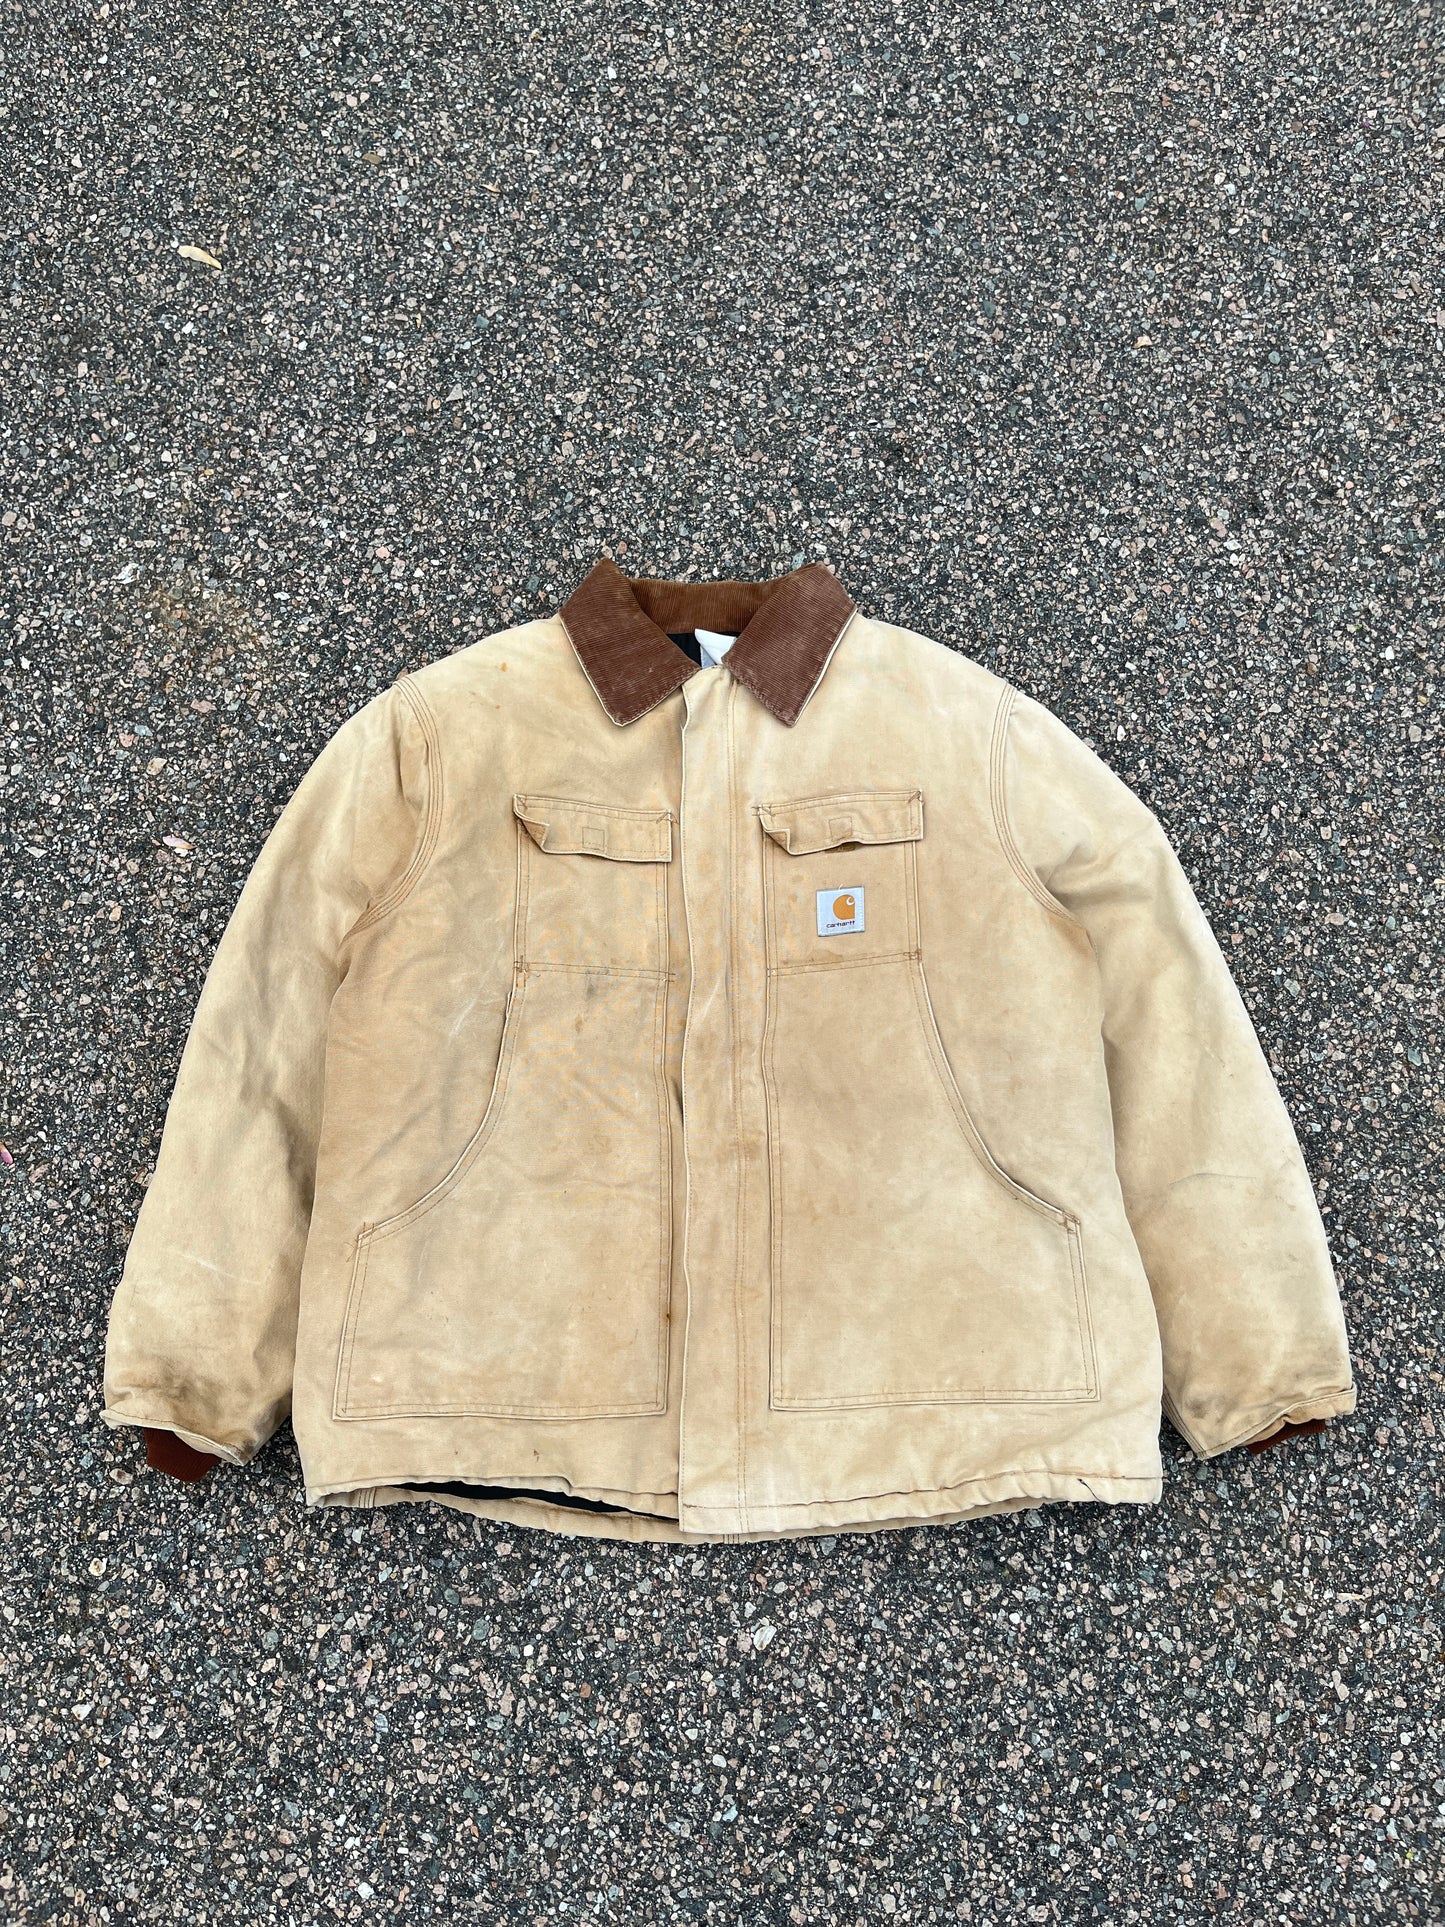 Faded Tan Carhartt Arctic Style Jacket - XL